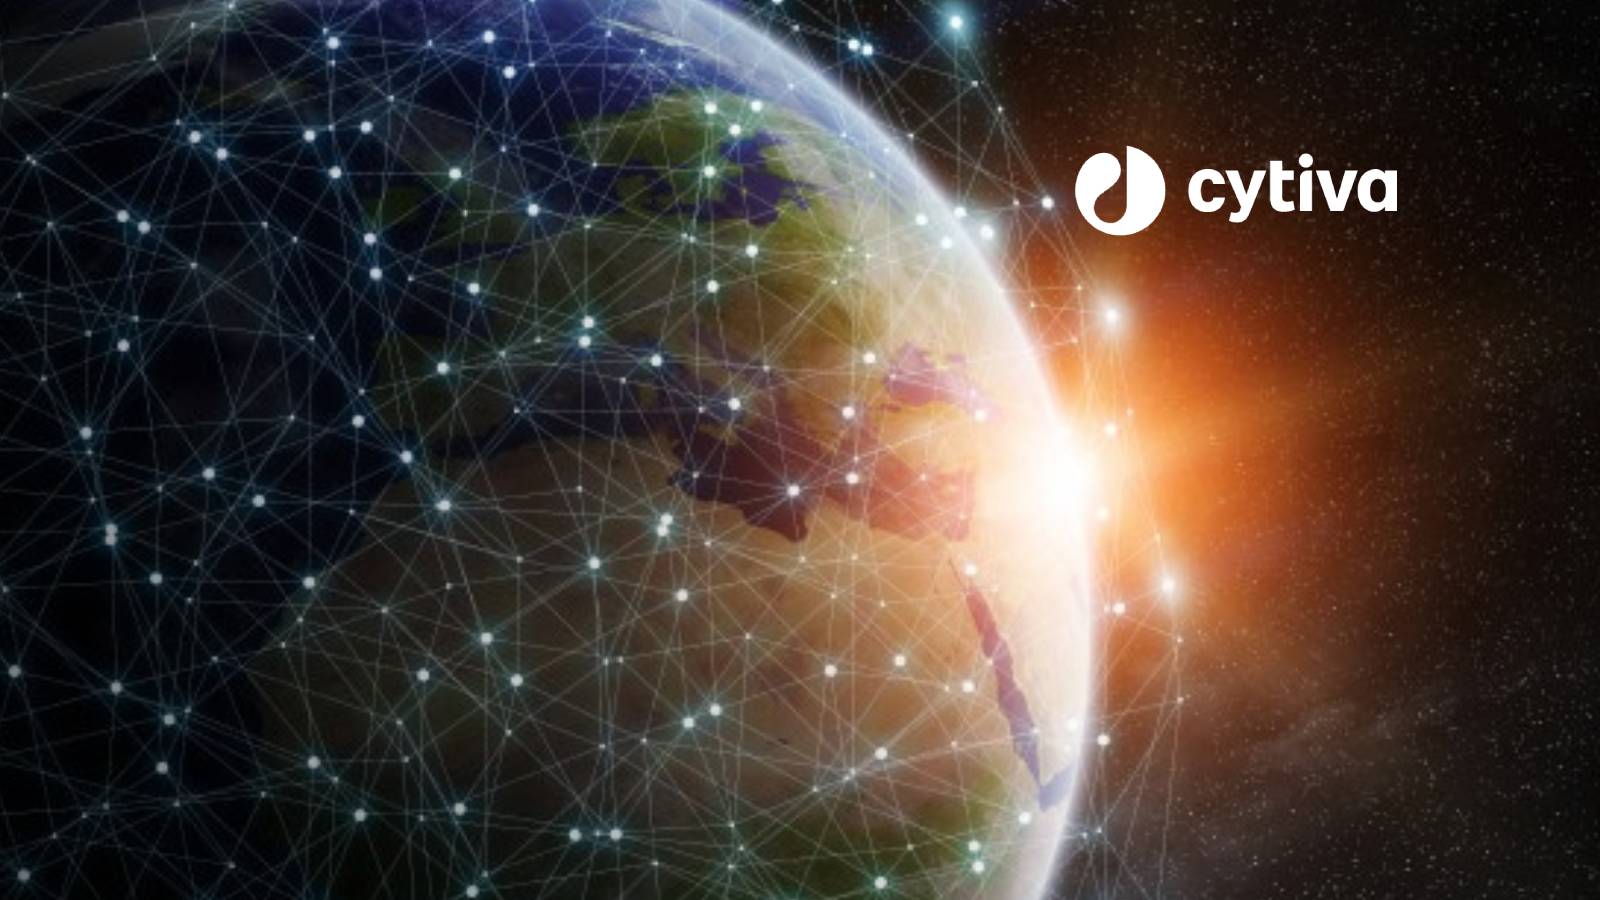 Introducing-Cytiva-Global-Life-Sciences-Leader